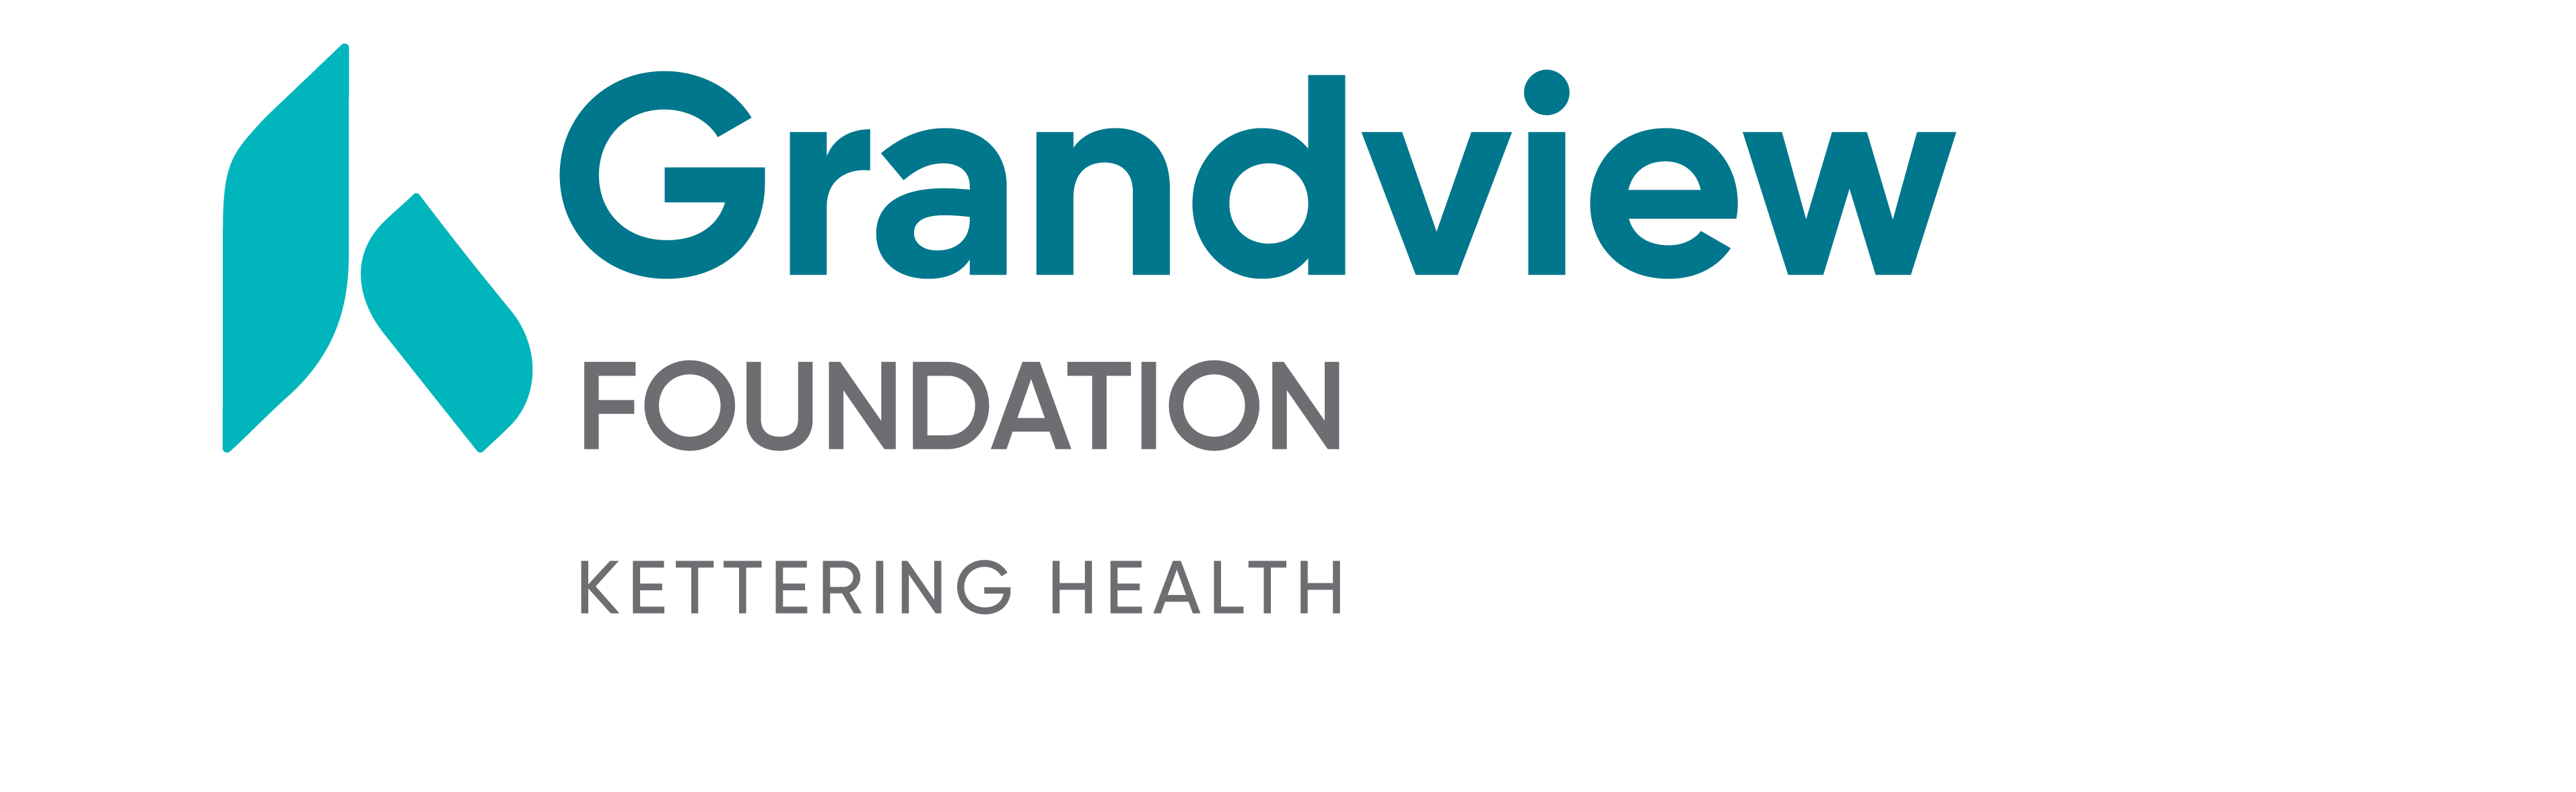 The Grandview Foundation